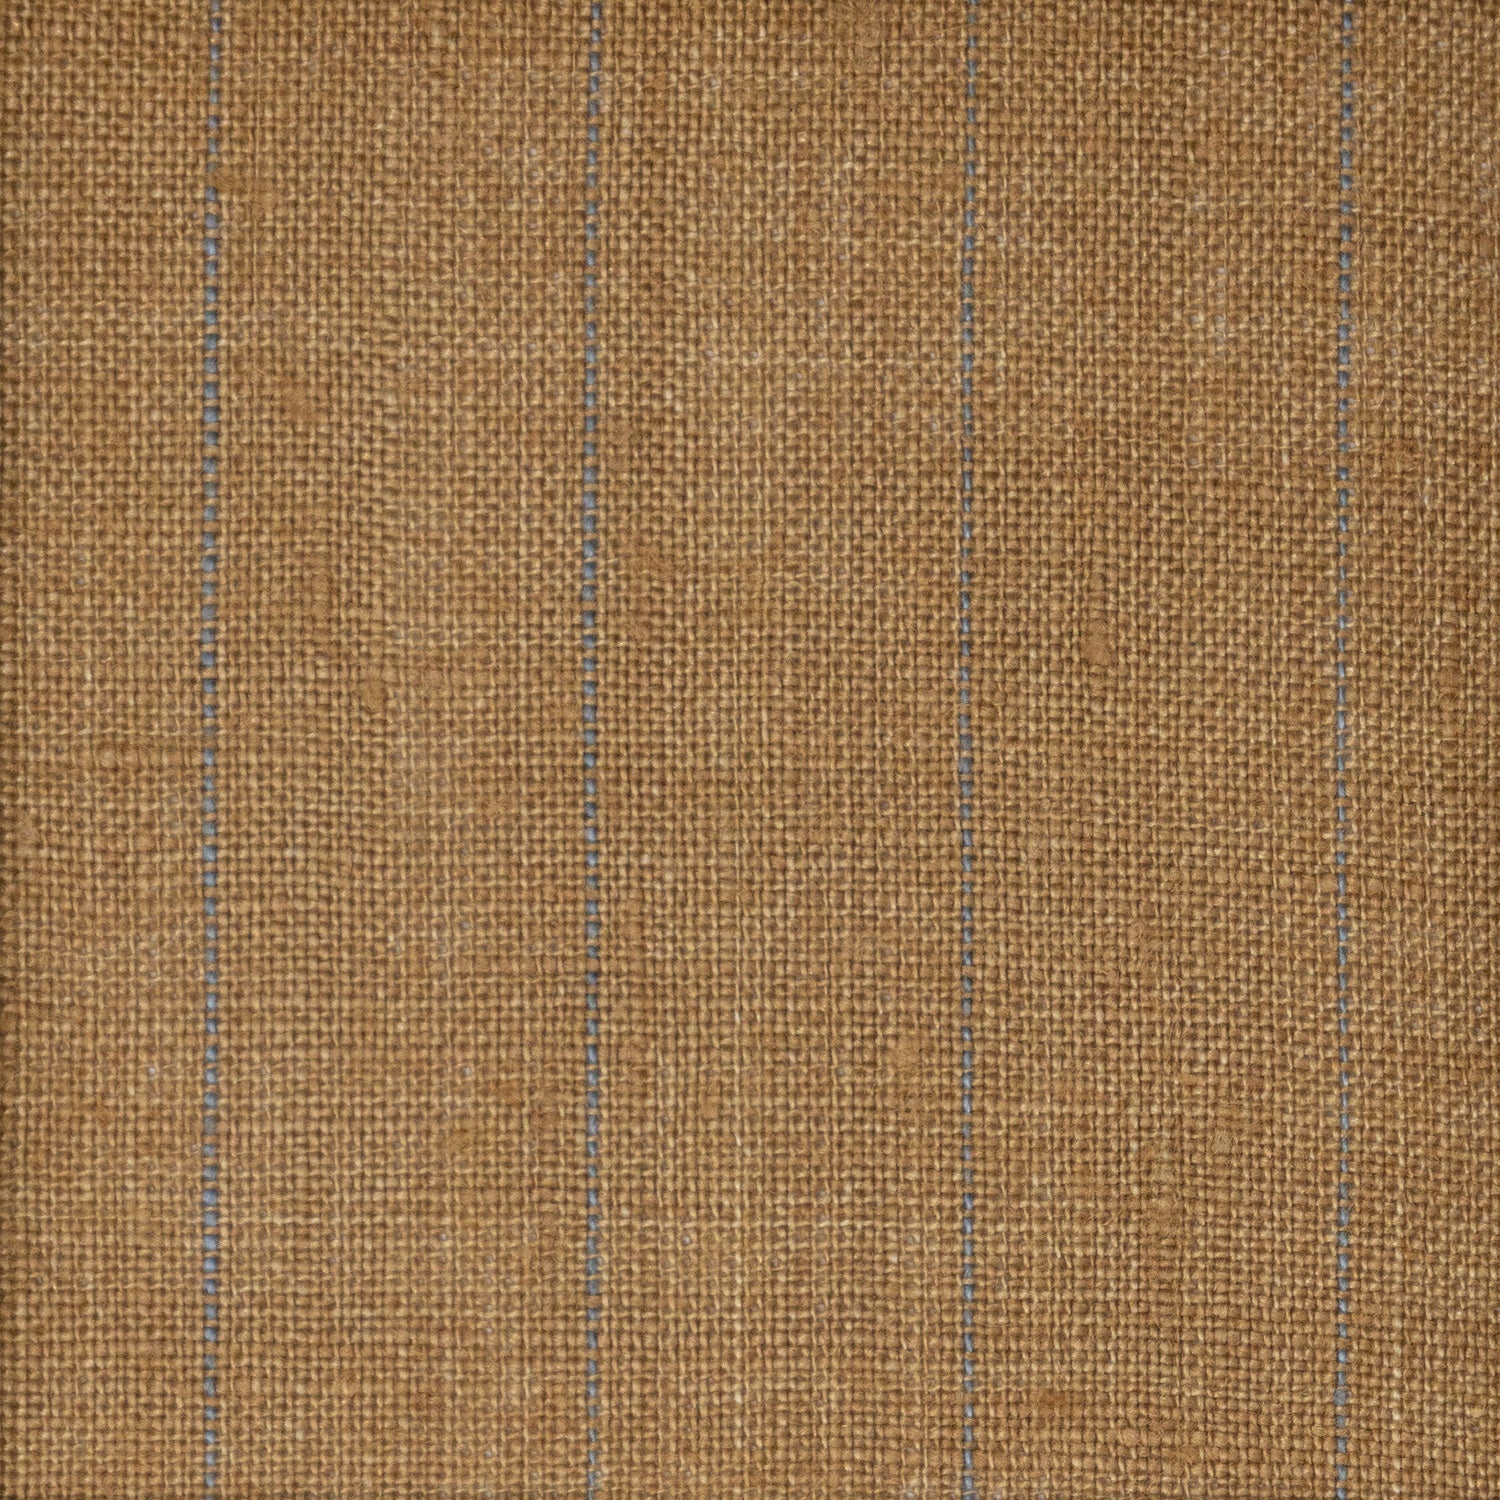 Gold & Light Blue Striped Linen - $14.00 yd. - Burnley & Trowbridge Co.